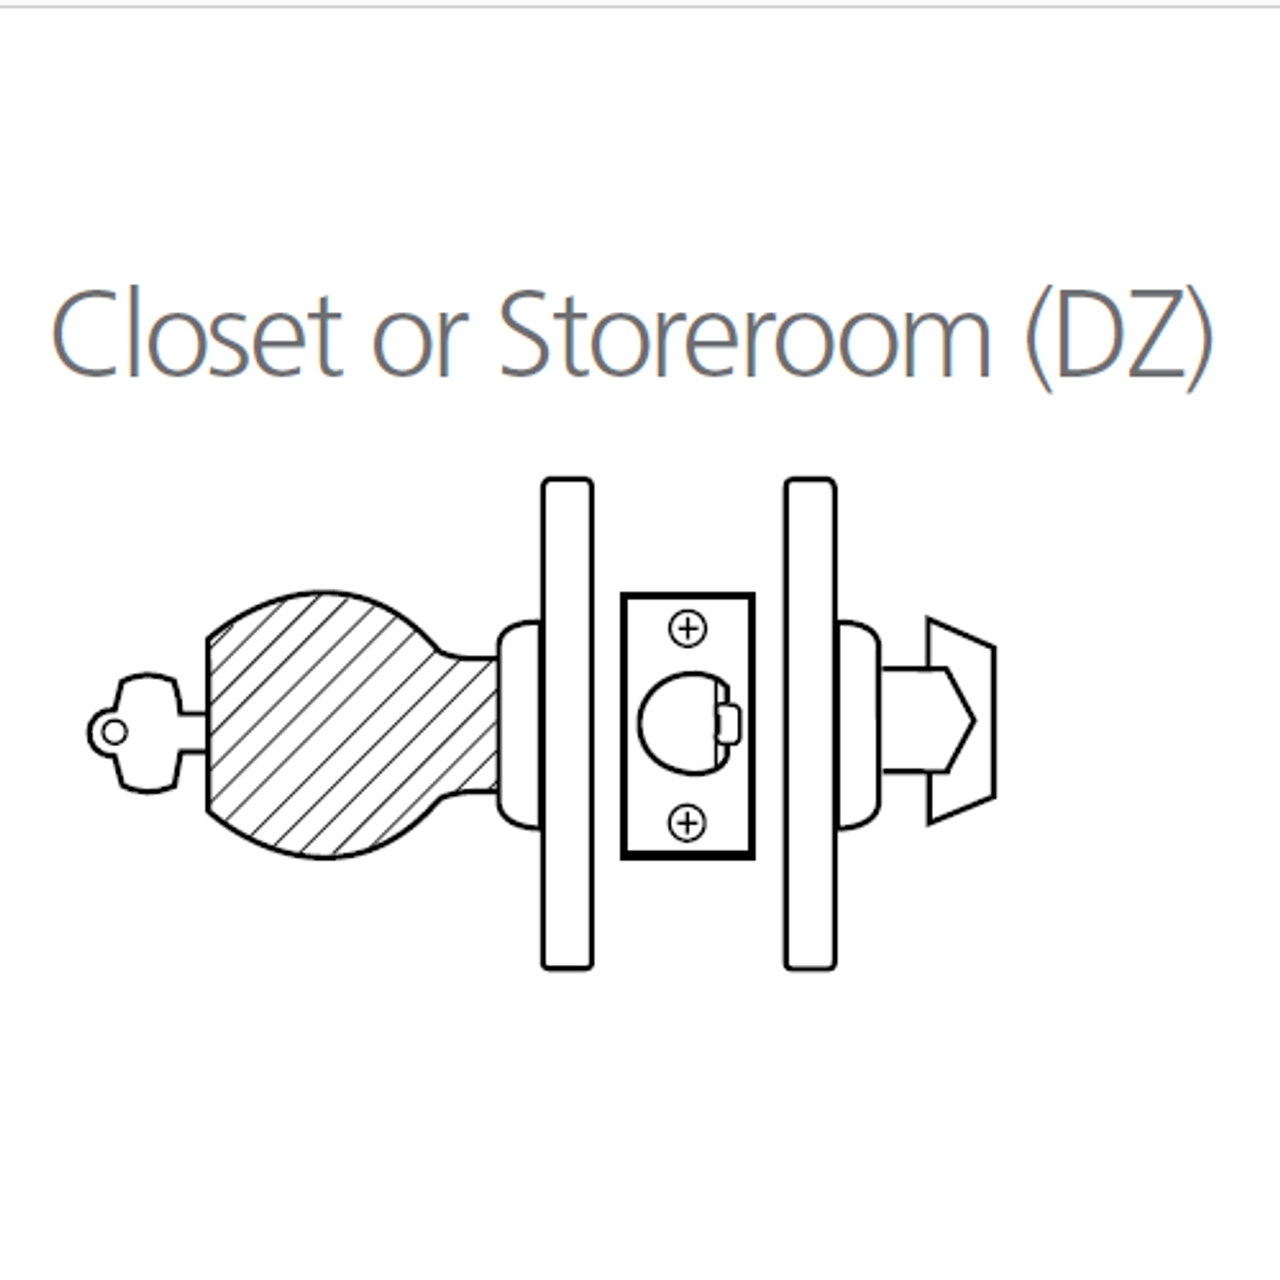 8K37DZ6DS3612 Best 8K Series Closet or Storeroom Heavy Duty Cylindrical Knob Locks with Tulip Style in Satin Bronze